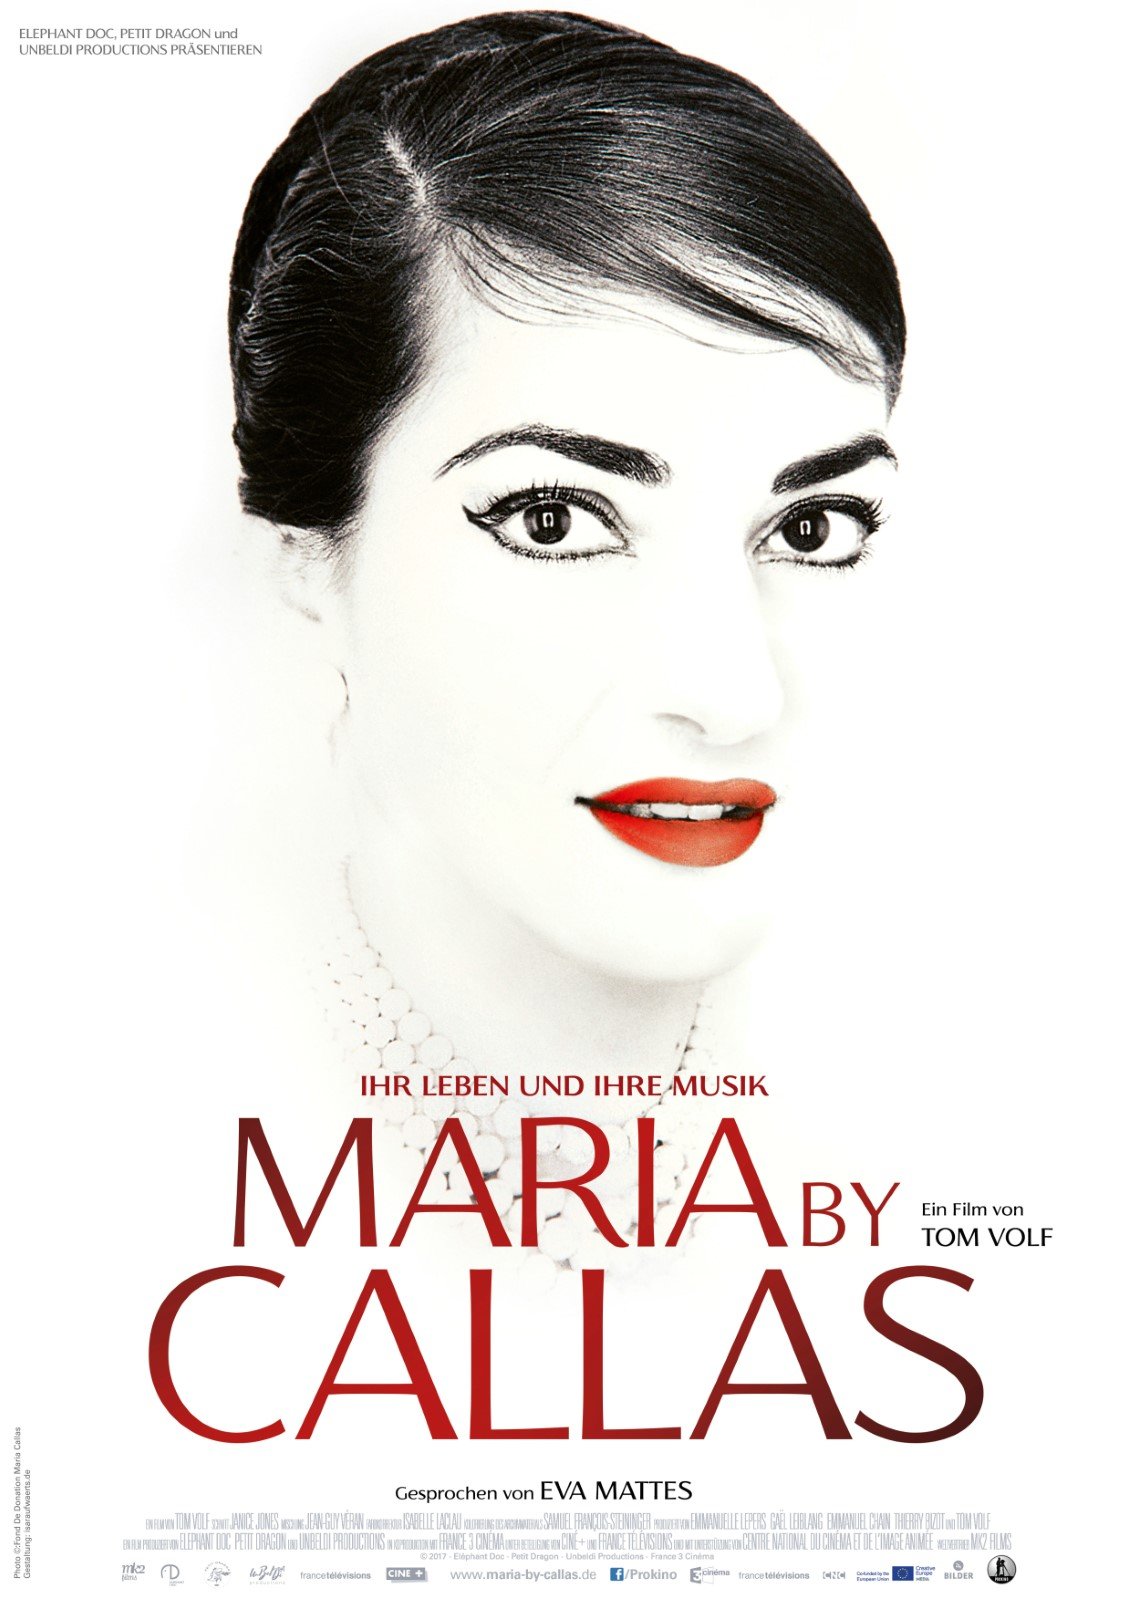 Wo kann man Maria by Callas online streamen?